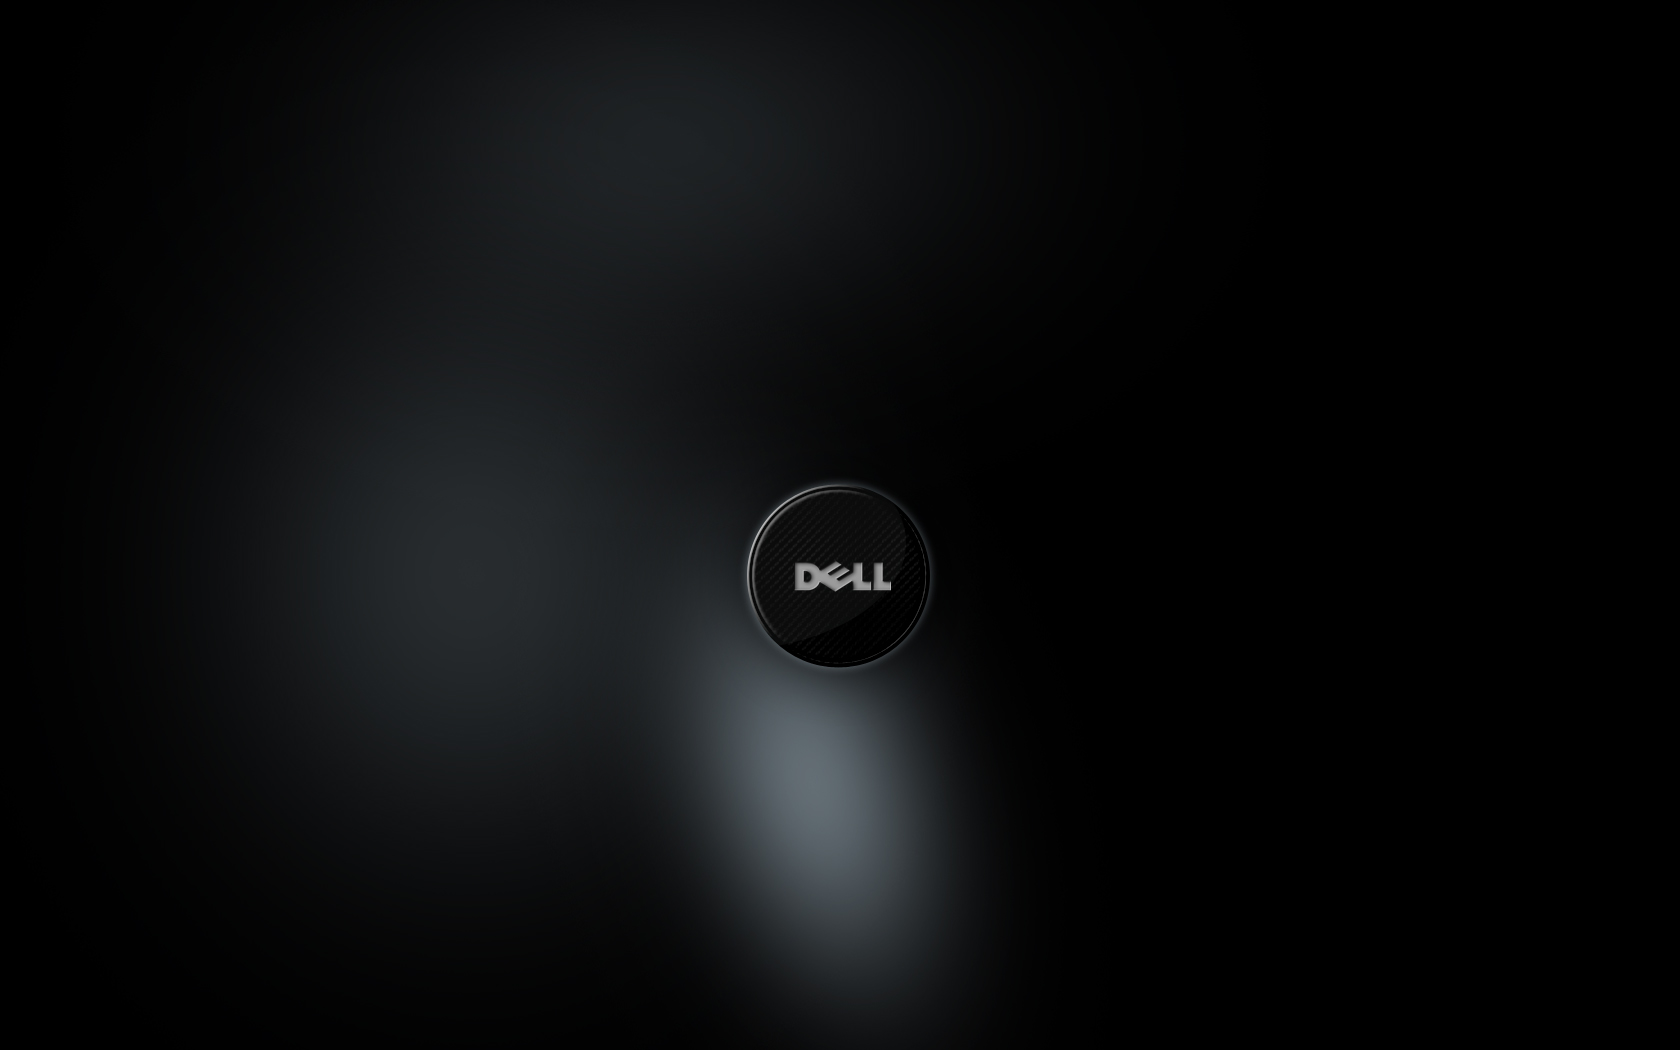 Dell Hd Keep Smiling 1680x1050 pixel Popular HD Wallpaper 43436